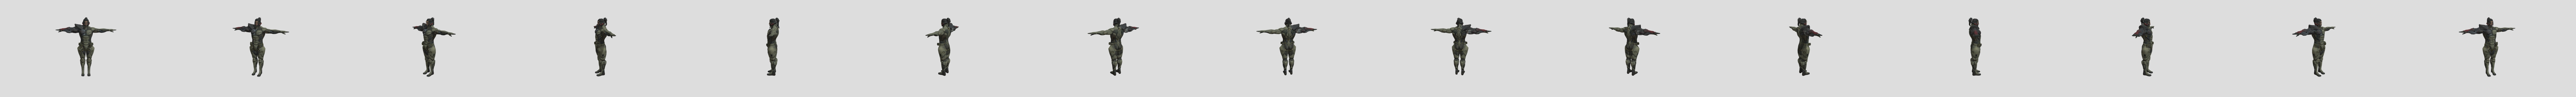 Metal Gear Rising - Jetstream Sam - Download Free 3D model by Mono_213  (@Mono_213) [7256008]